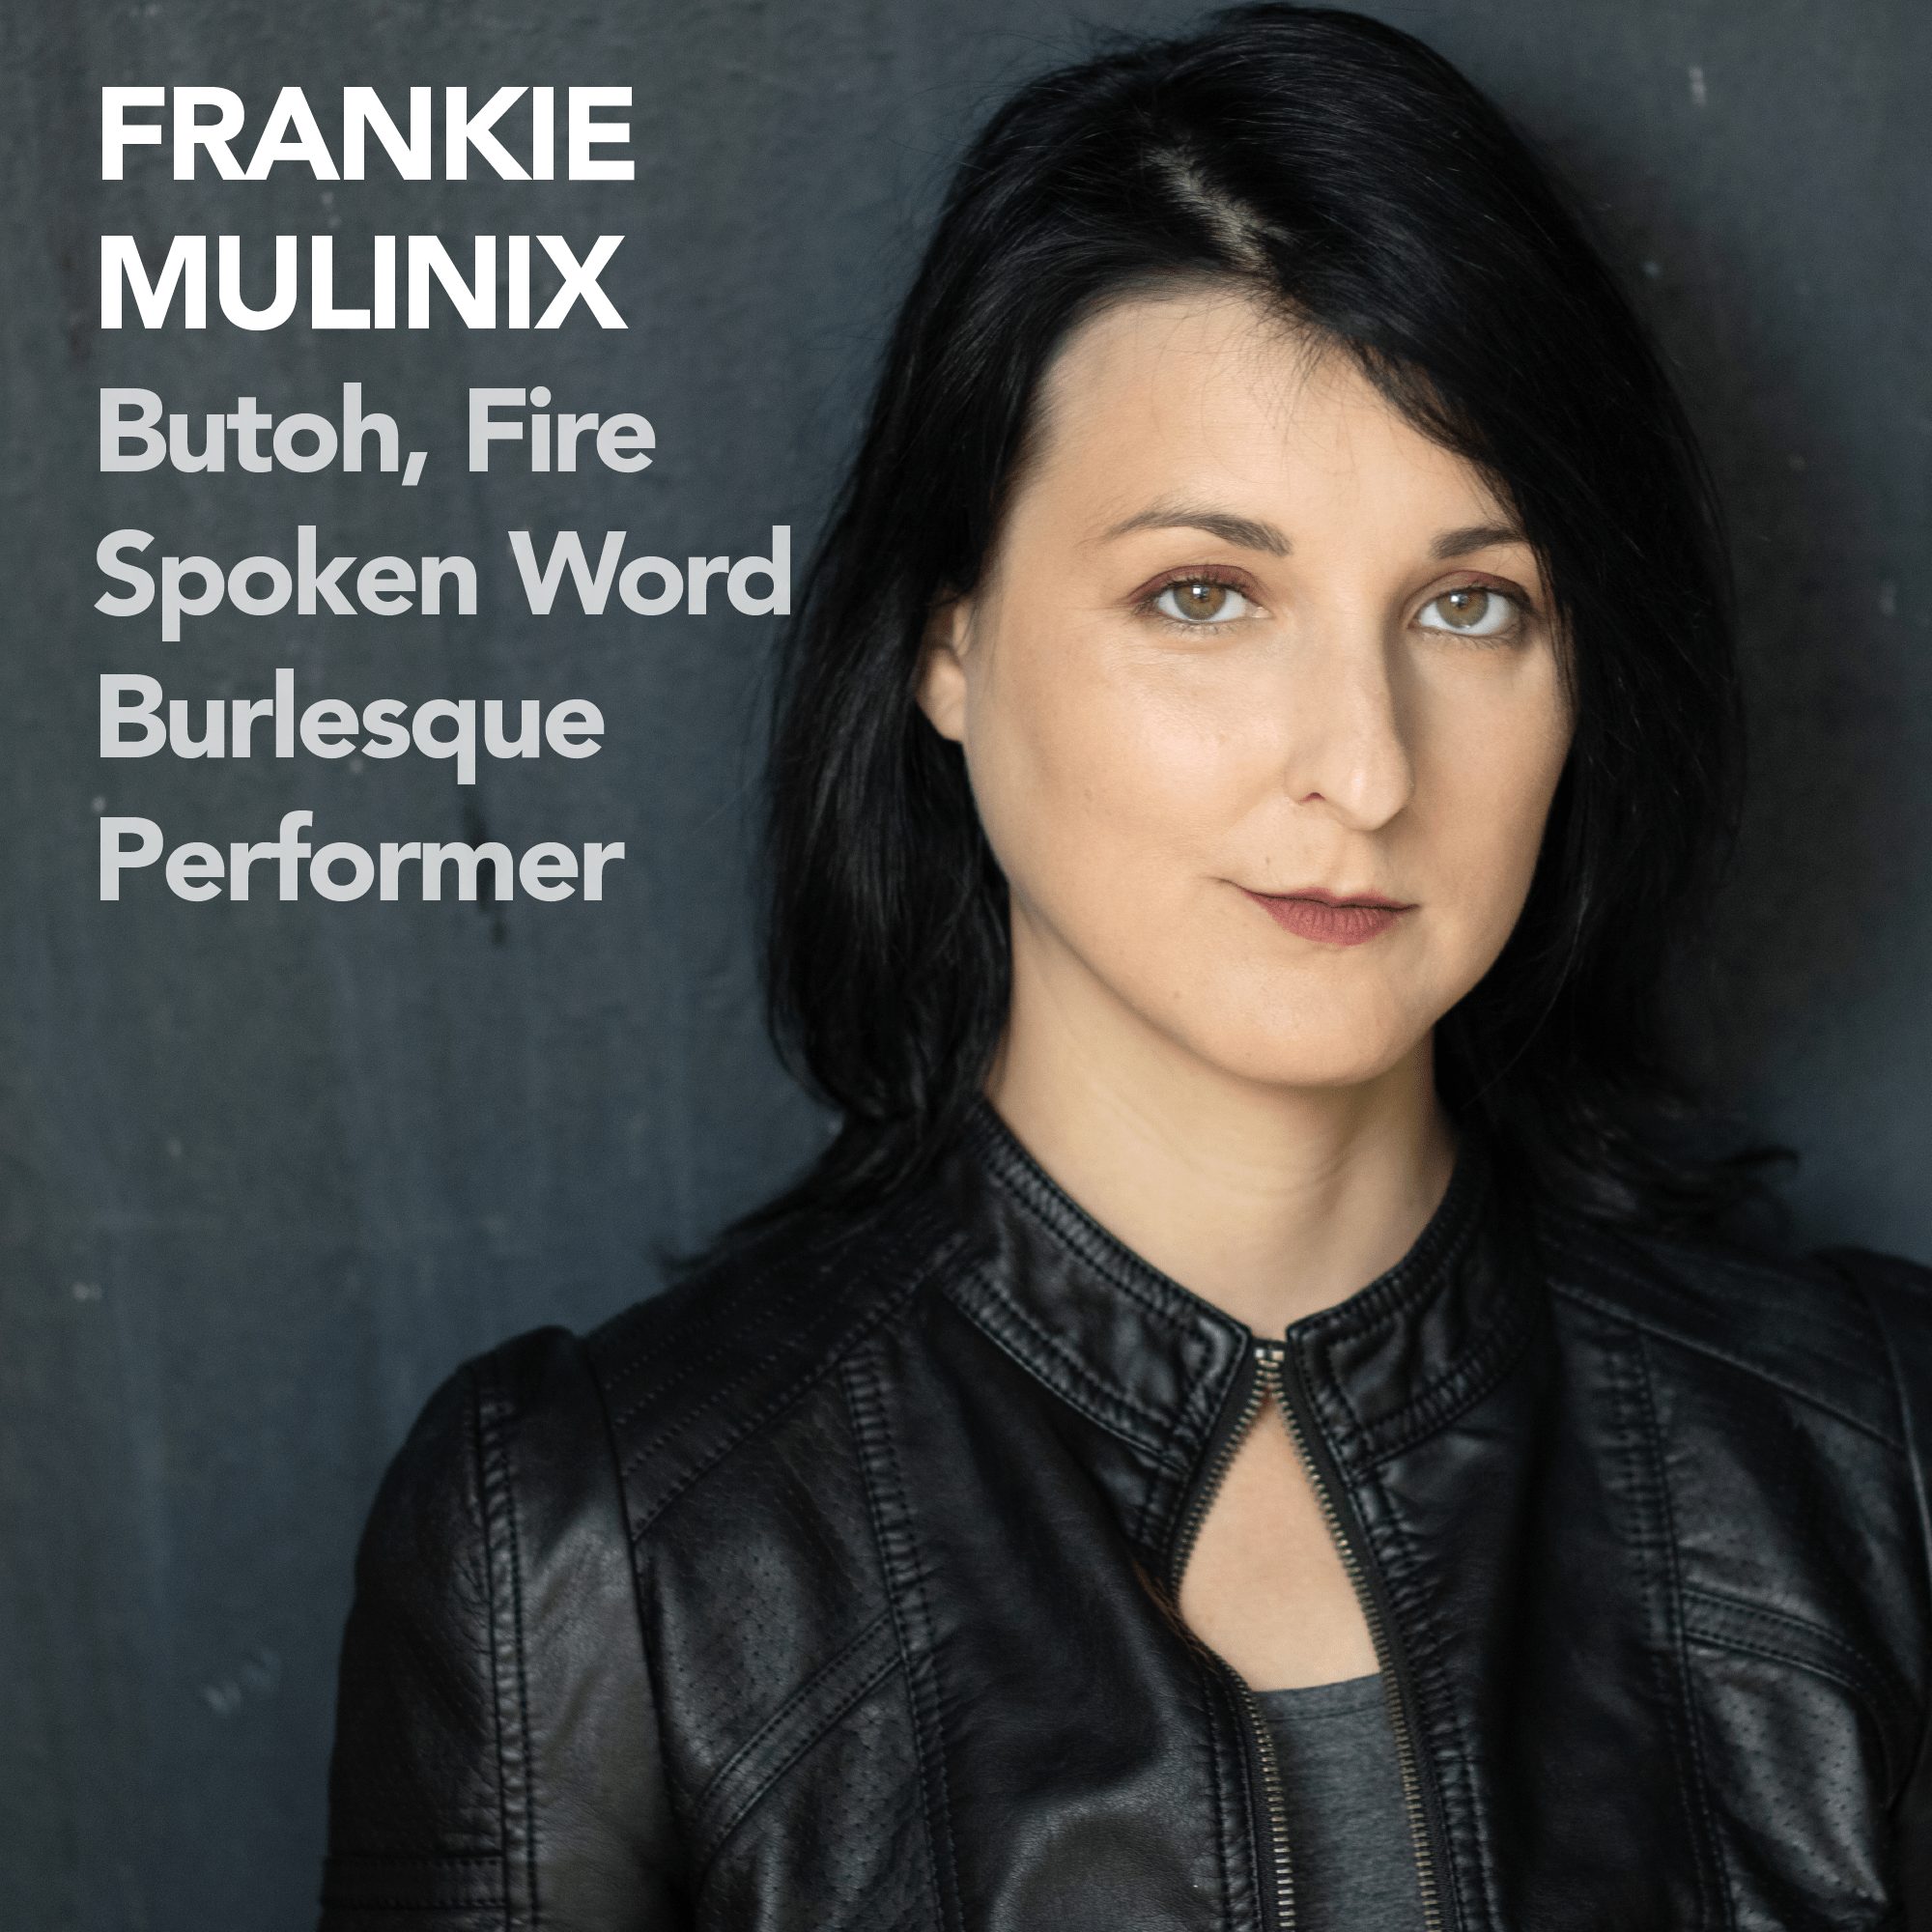 Frankie Mulinix: Butoh, Fire, Spoken Word, Burlesque Performer